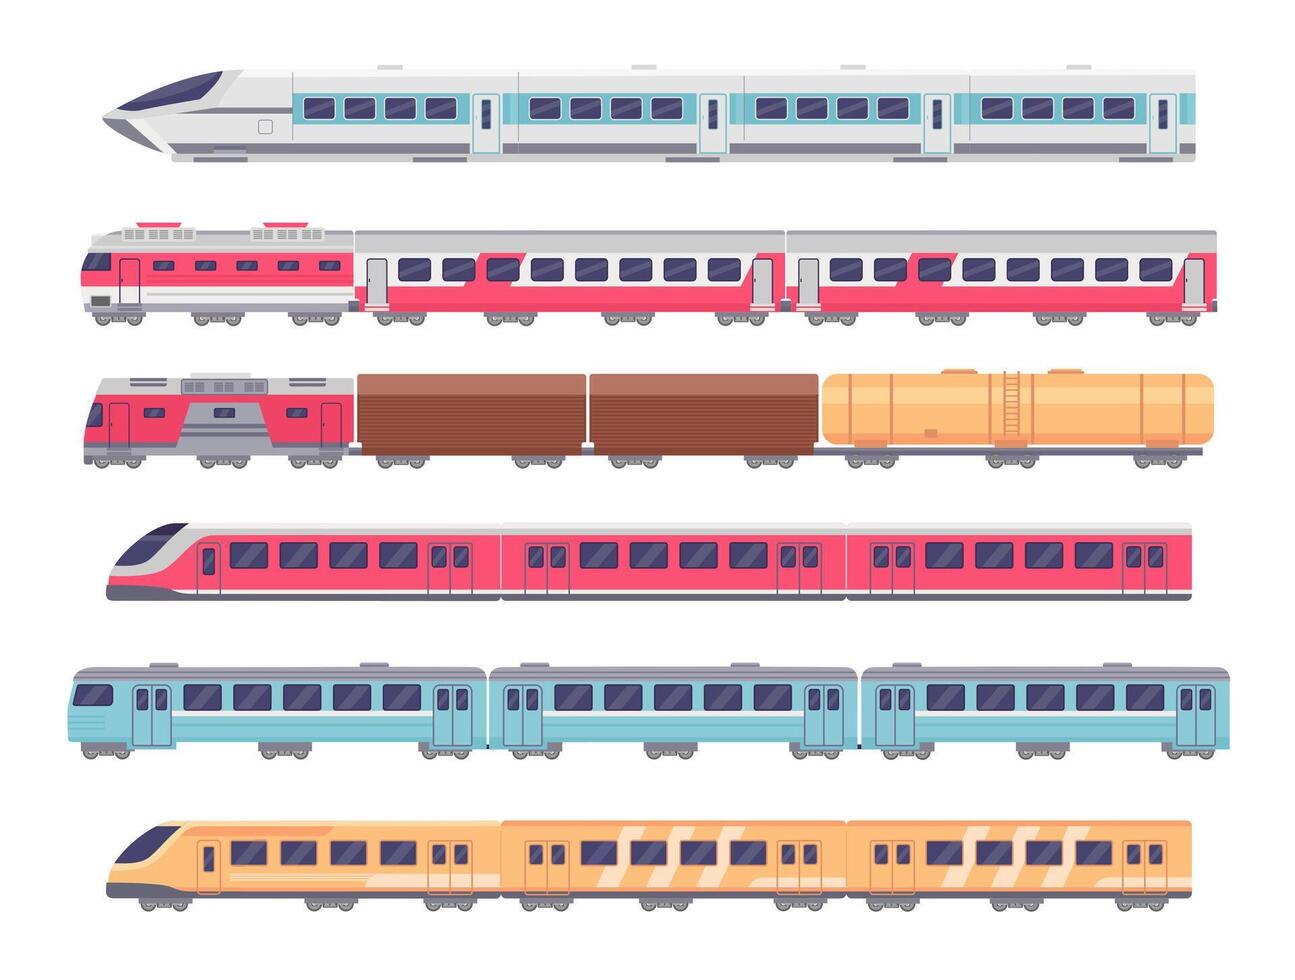 passeggeri treni. cartone animato metropolitana, esprimere e carico treno. metropolitana trasporto con vagoni. la metropolitana locomotiva, ferrovia carrozza vettore impostato